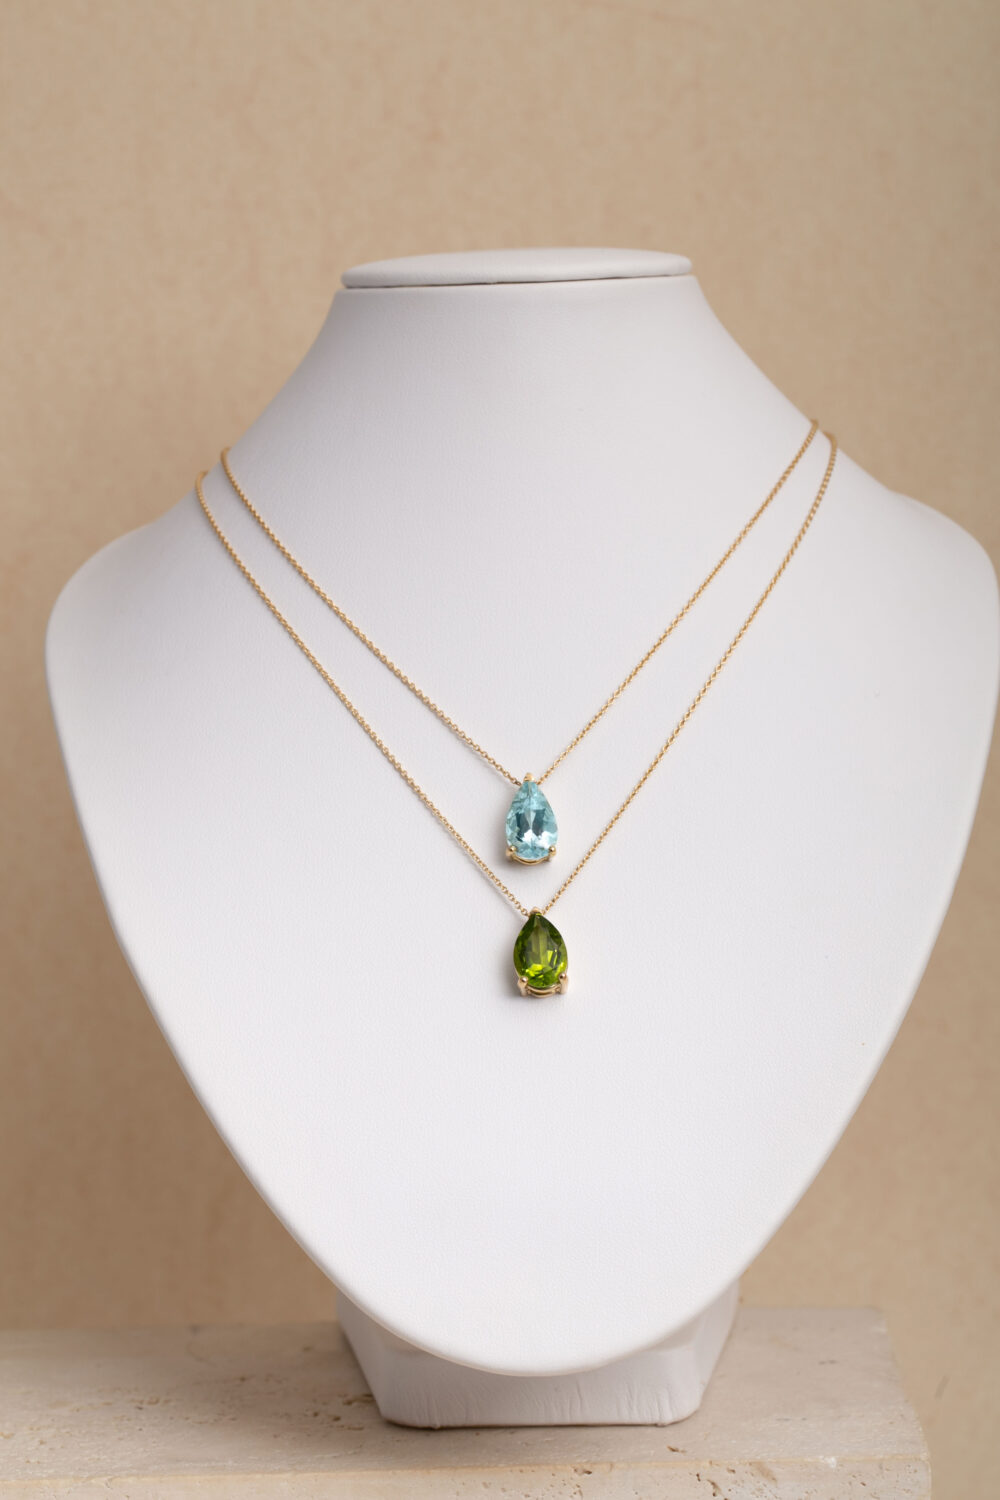 18-karat gold necklace with an aquamarine gemstone.